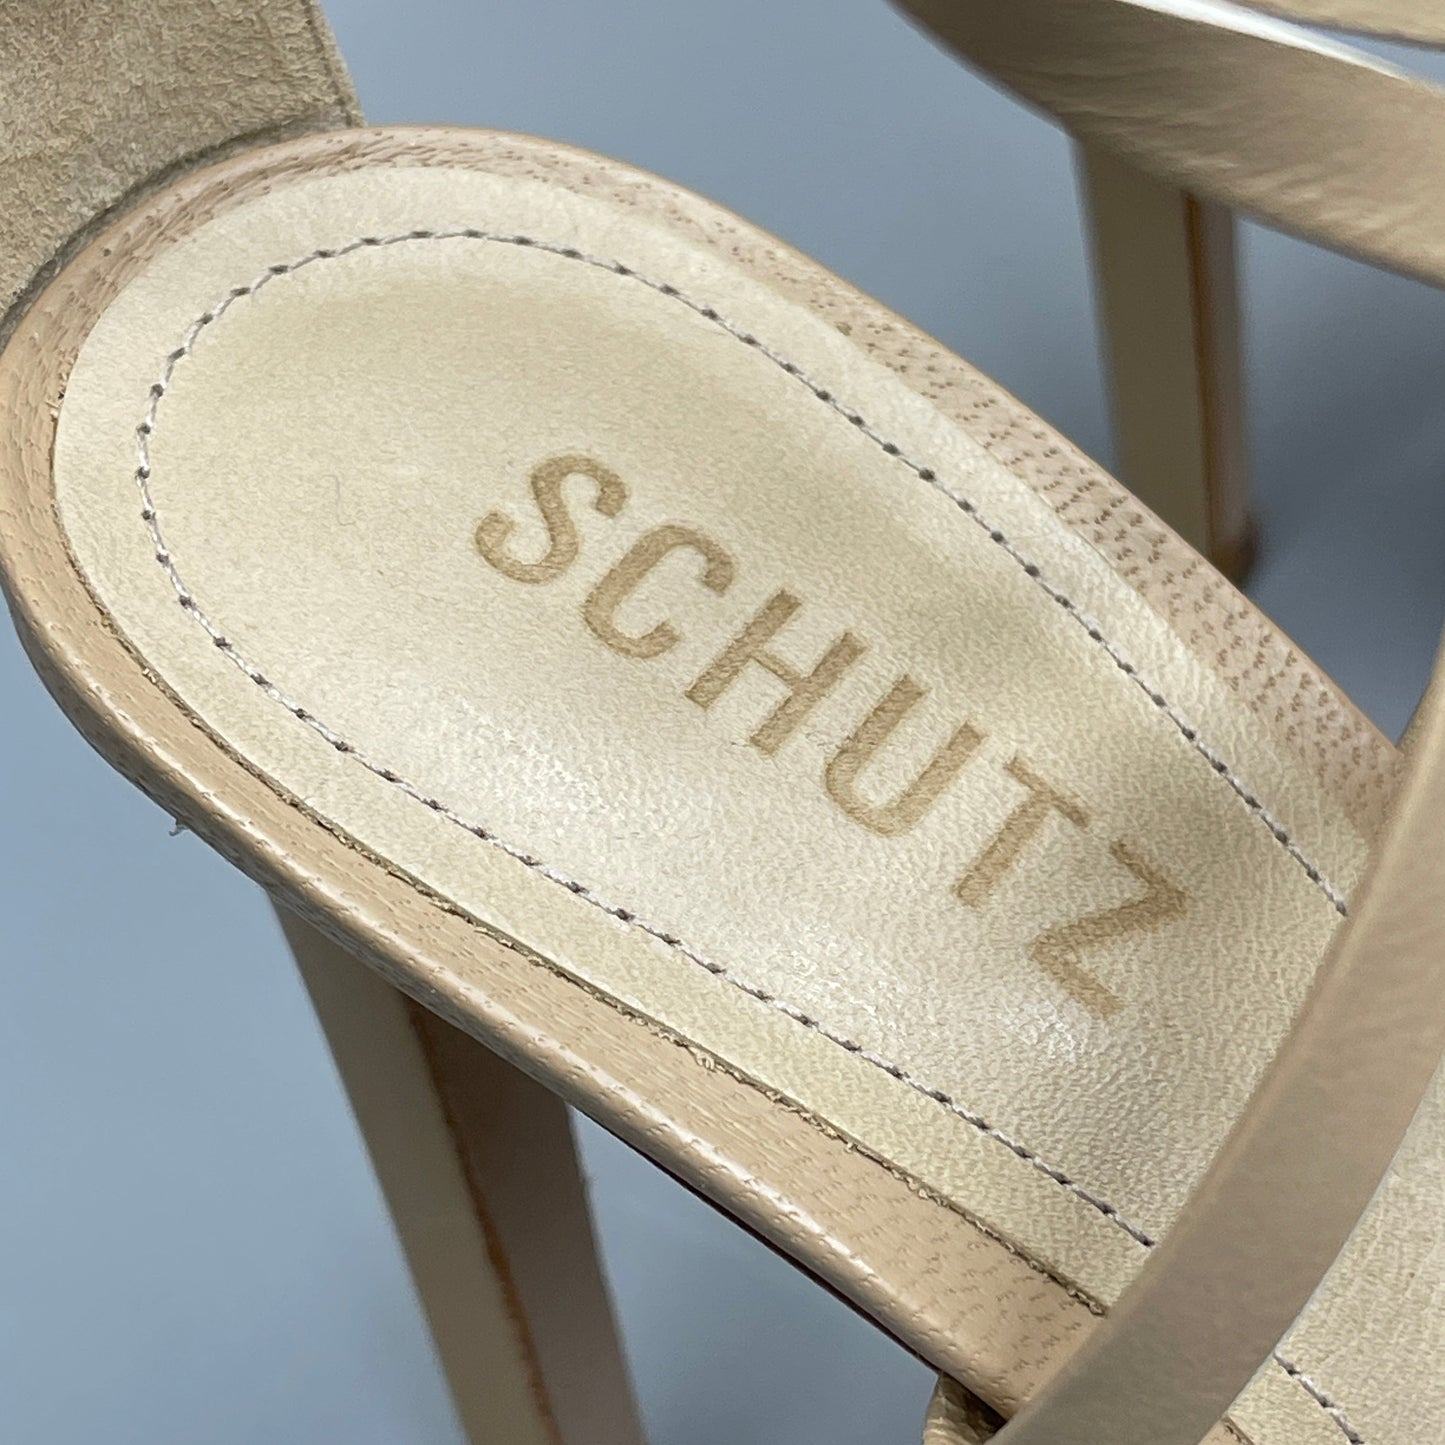 SCHUTZ Bryce Ankle Tie Women's Leather High Heel Sandal Light Nude Sz 6.5B (New)